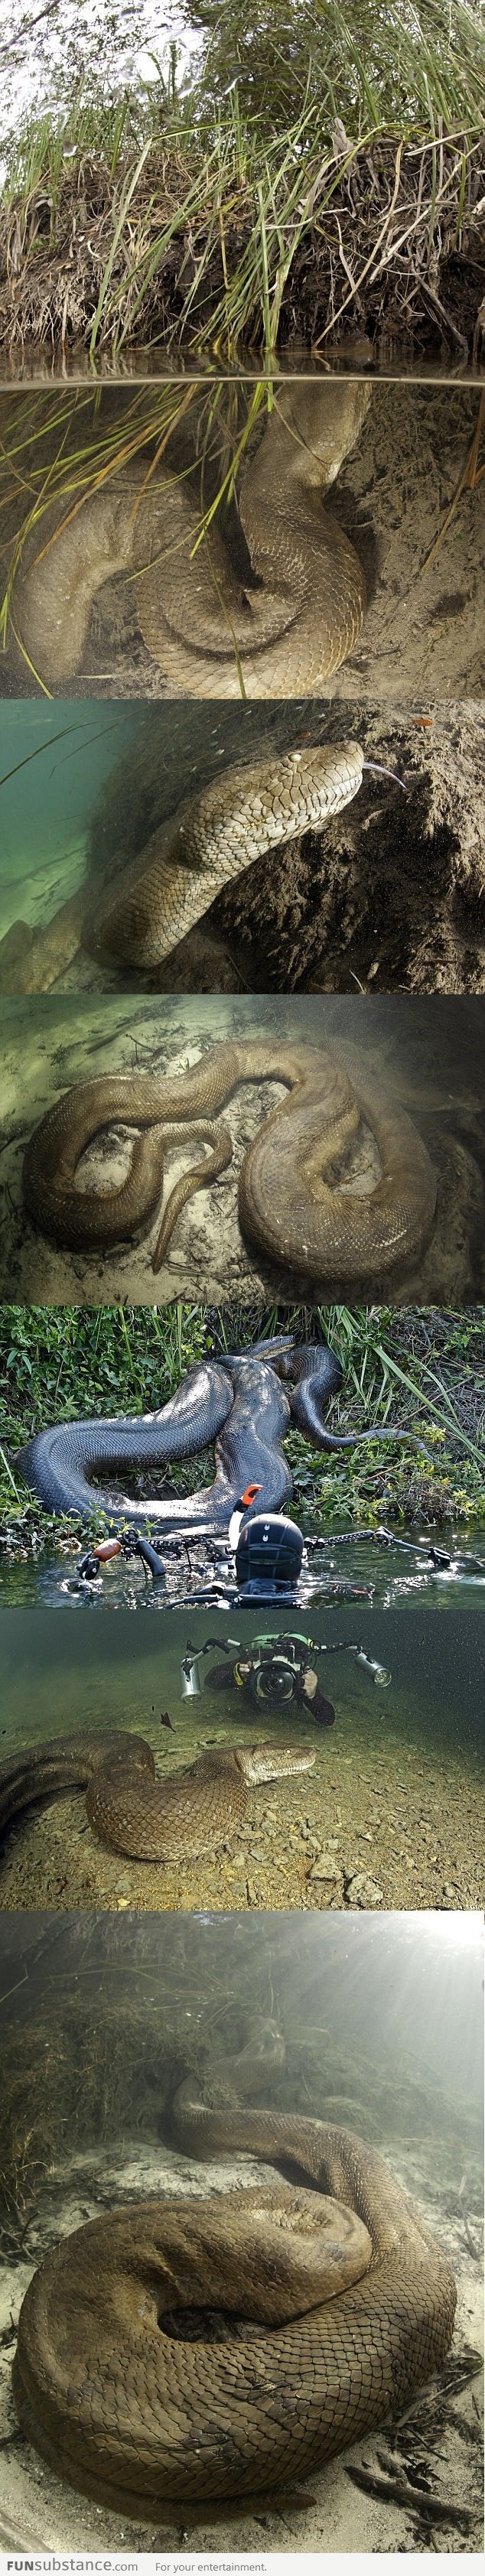 Amazing 26-Foot Anaconda